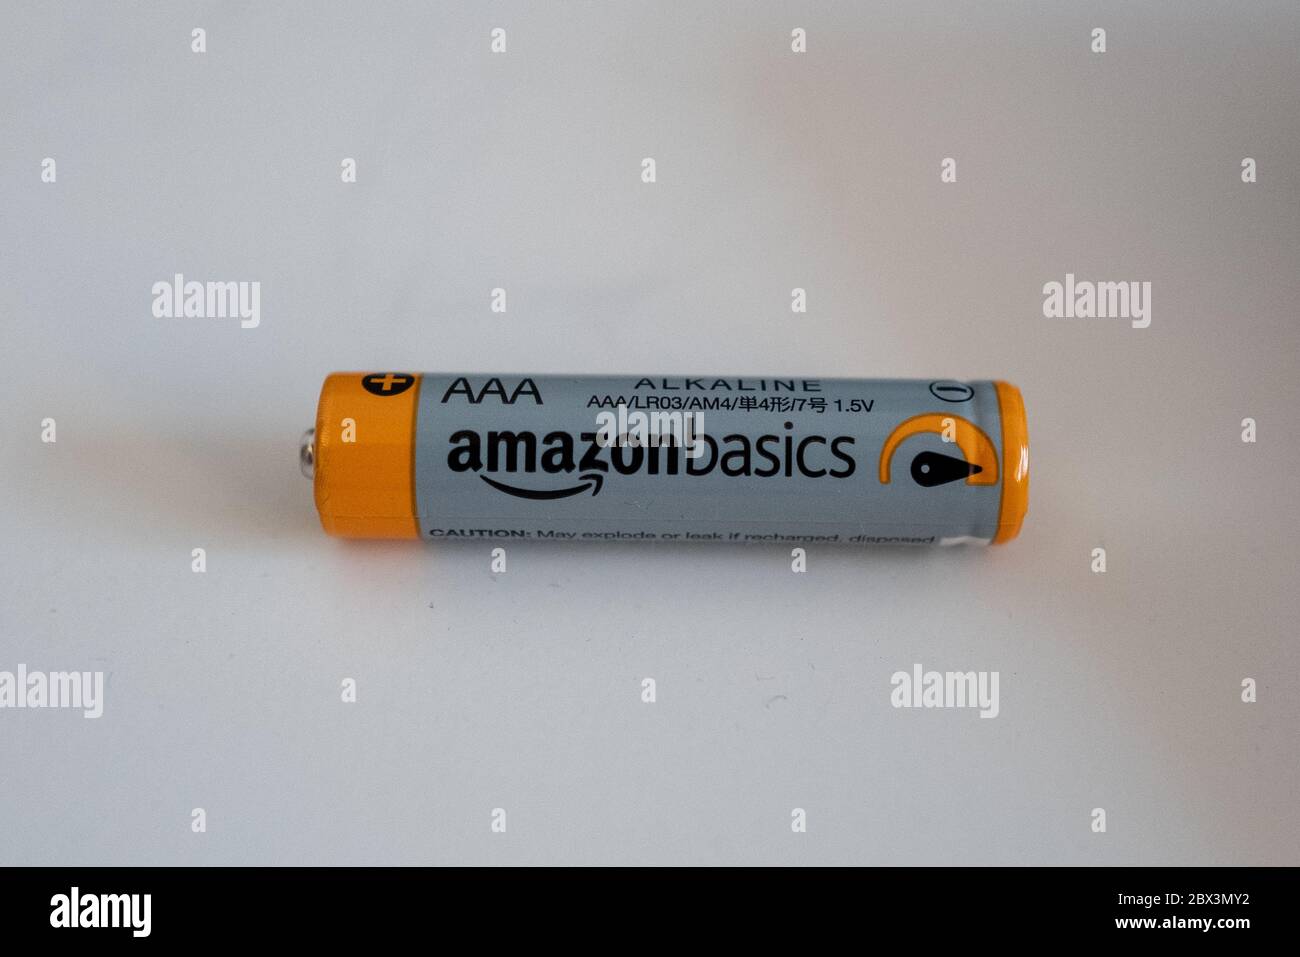 Amazon basics hi-res stock photography and images - Alamy